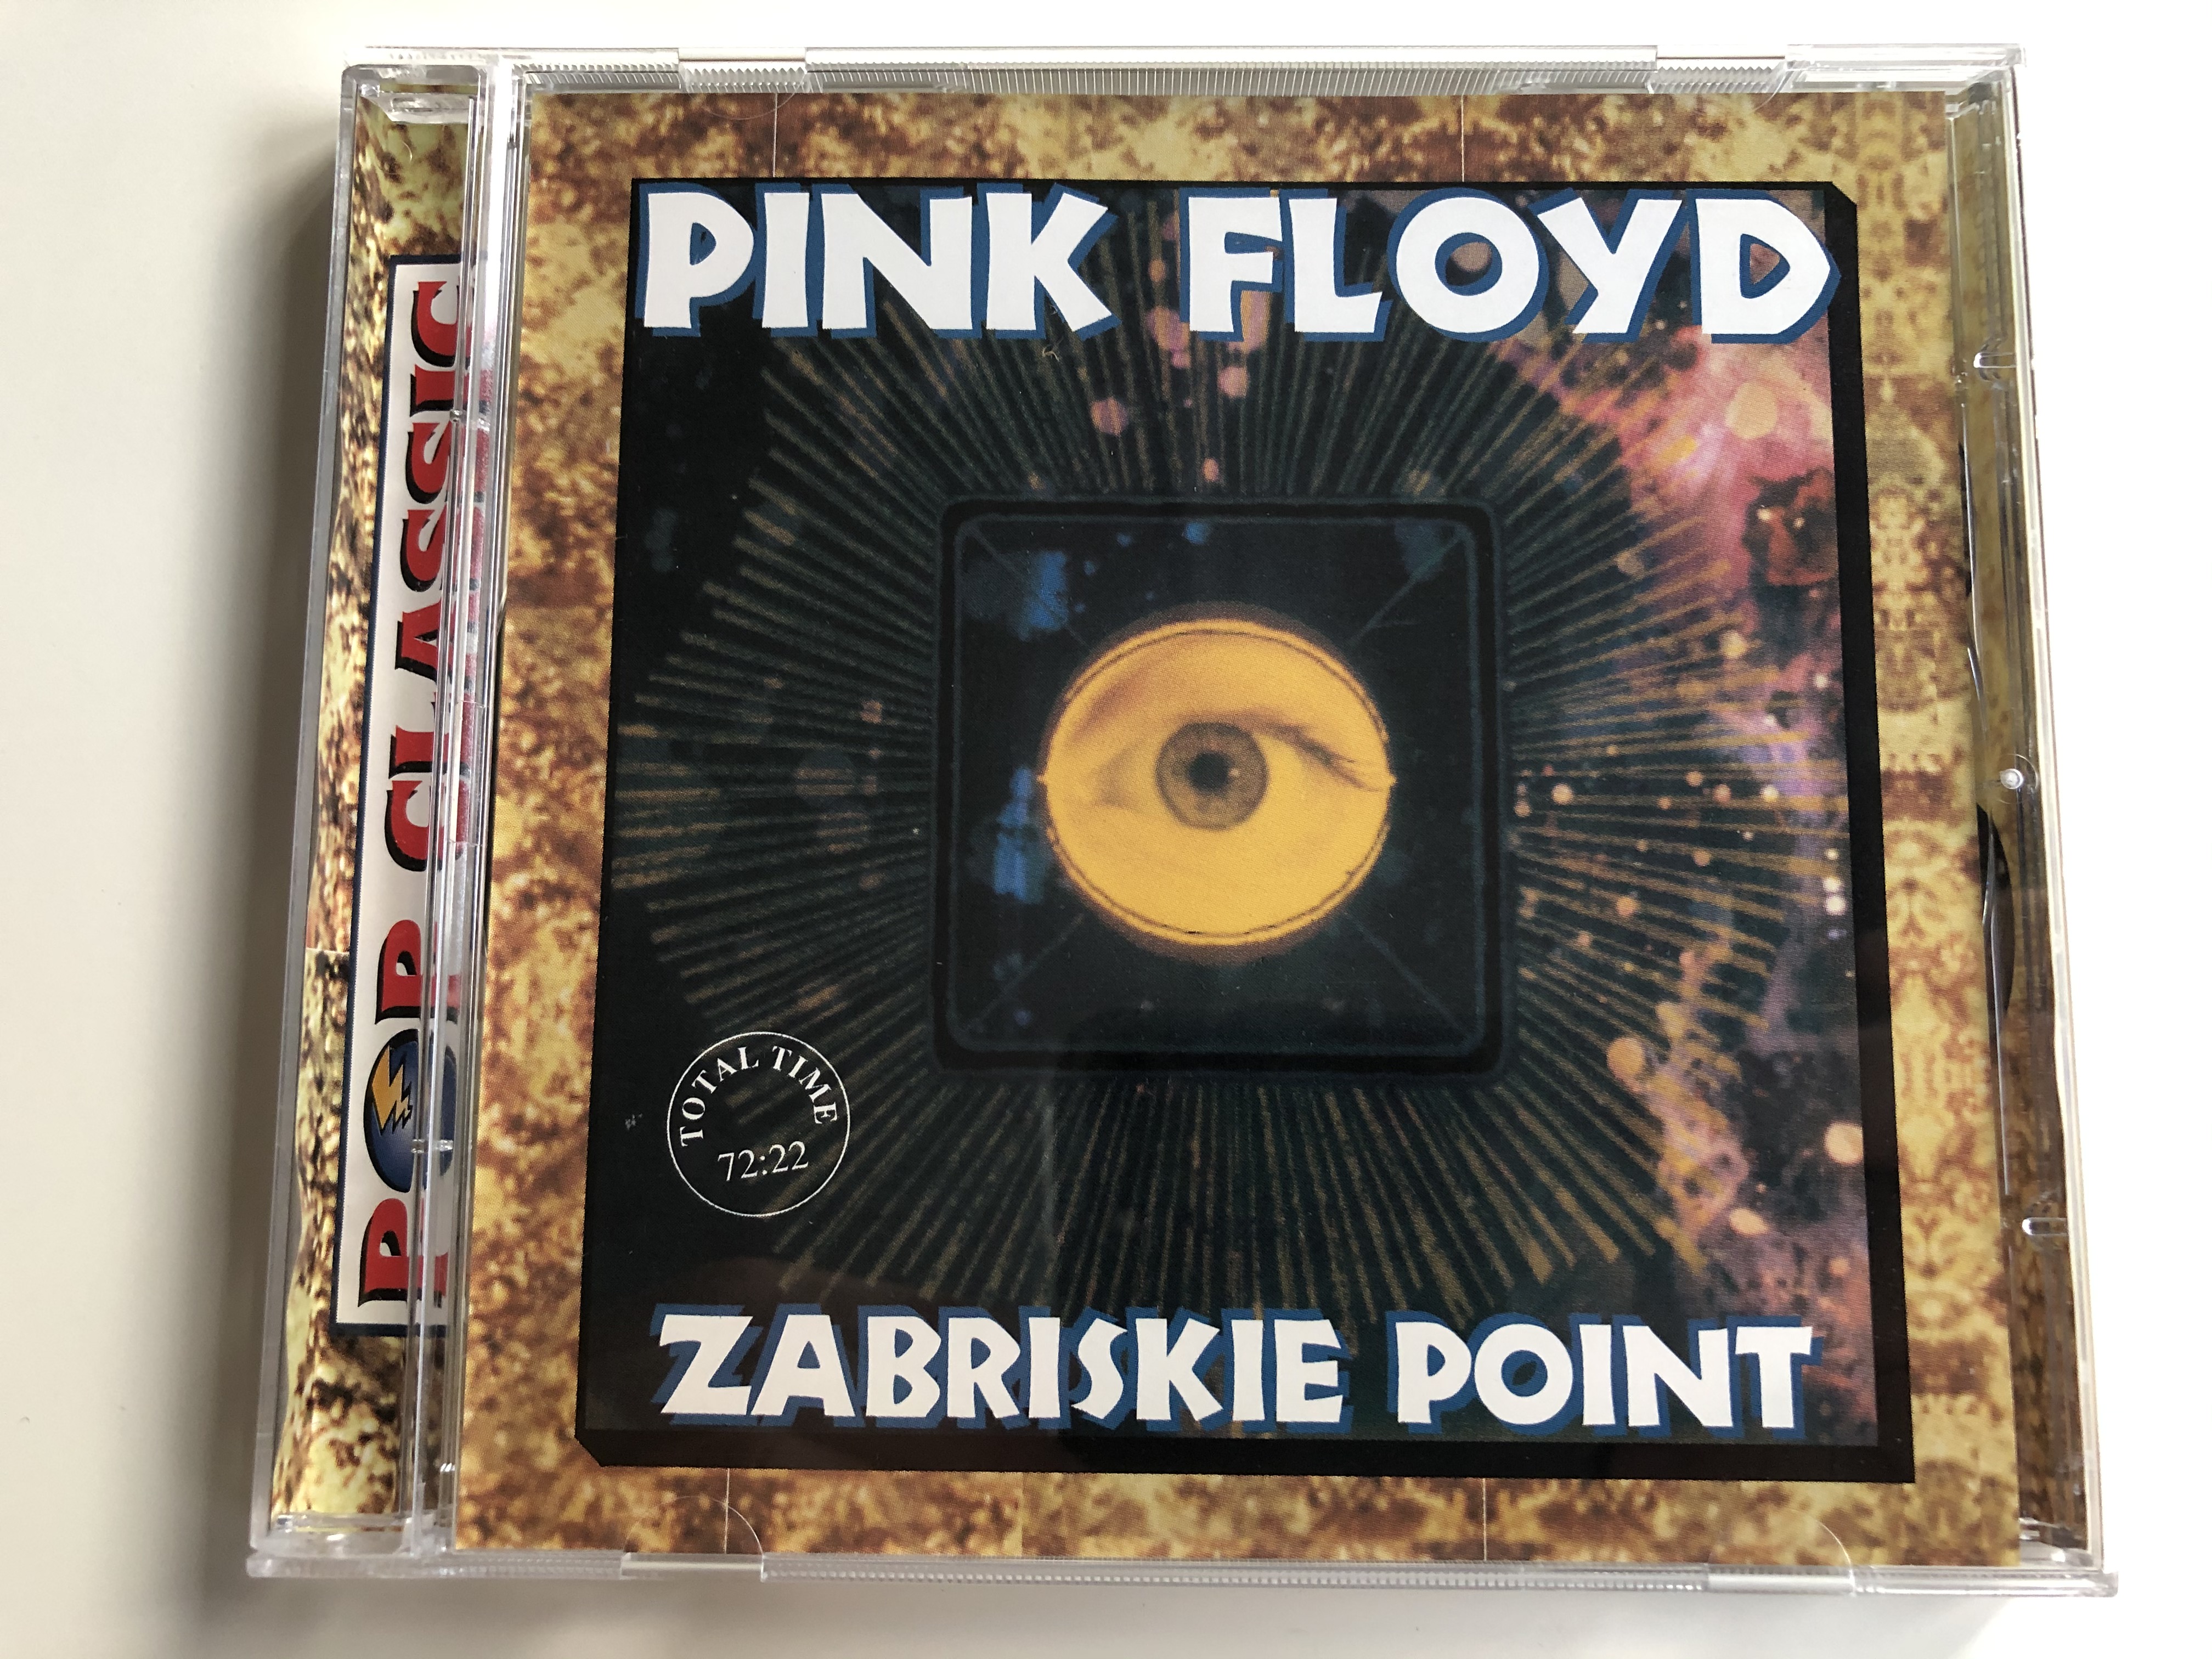 pink-floyd-zabriskie-point-total-time-72.22-pop-classic-euroton-audio-cd-eucd-0122-1-.jpg